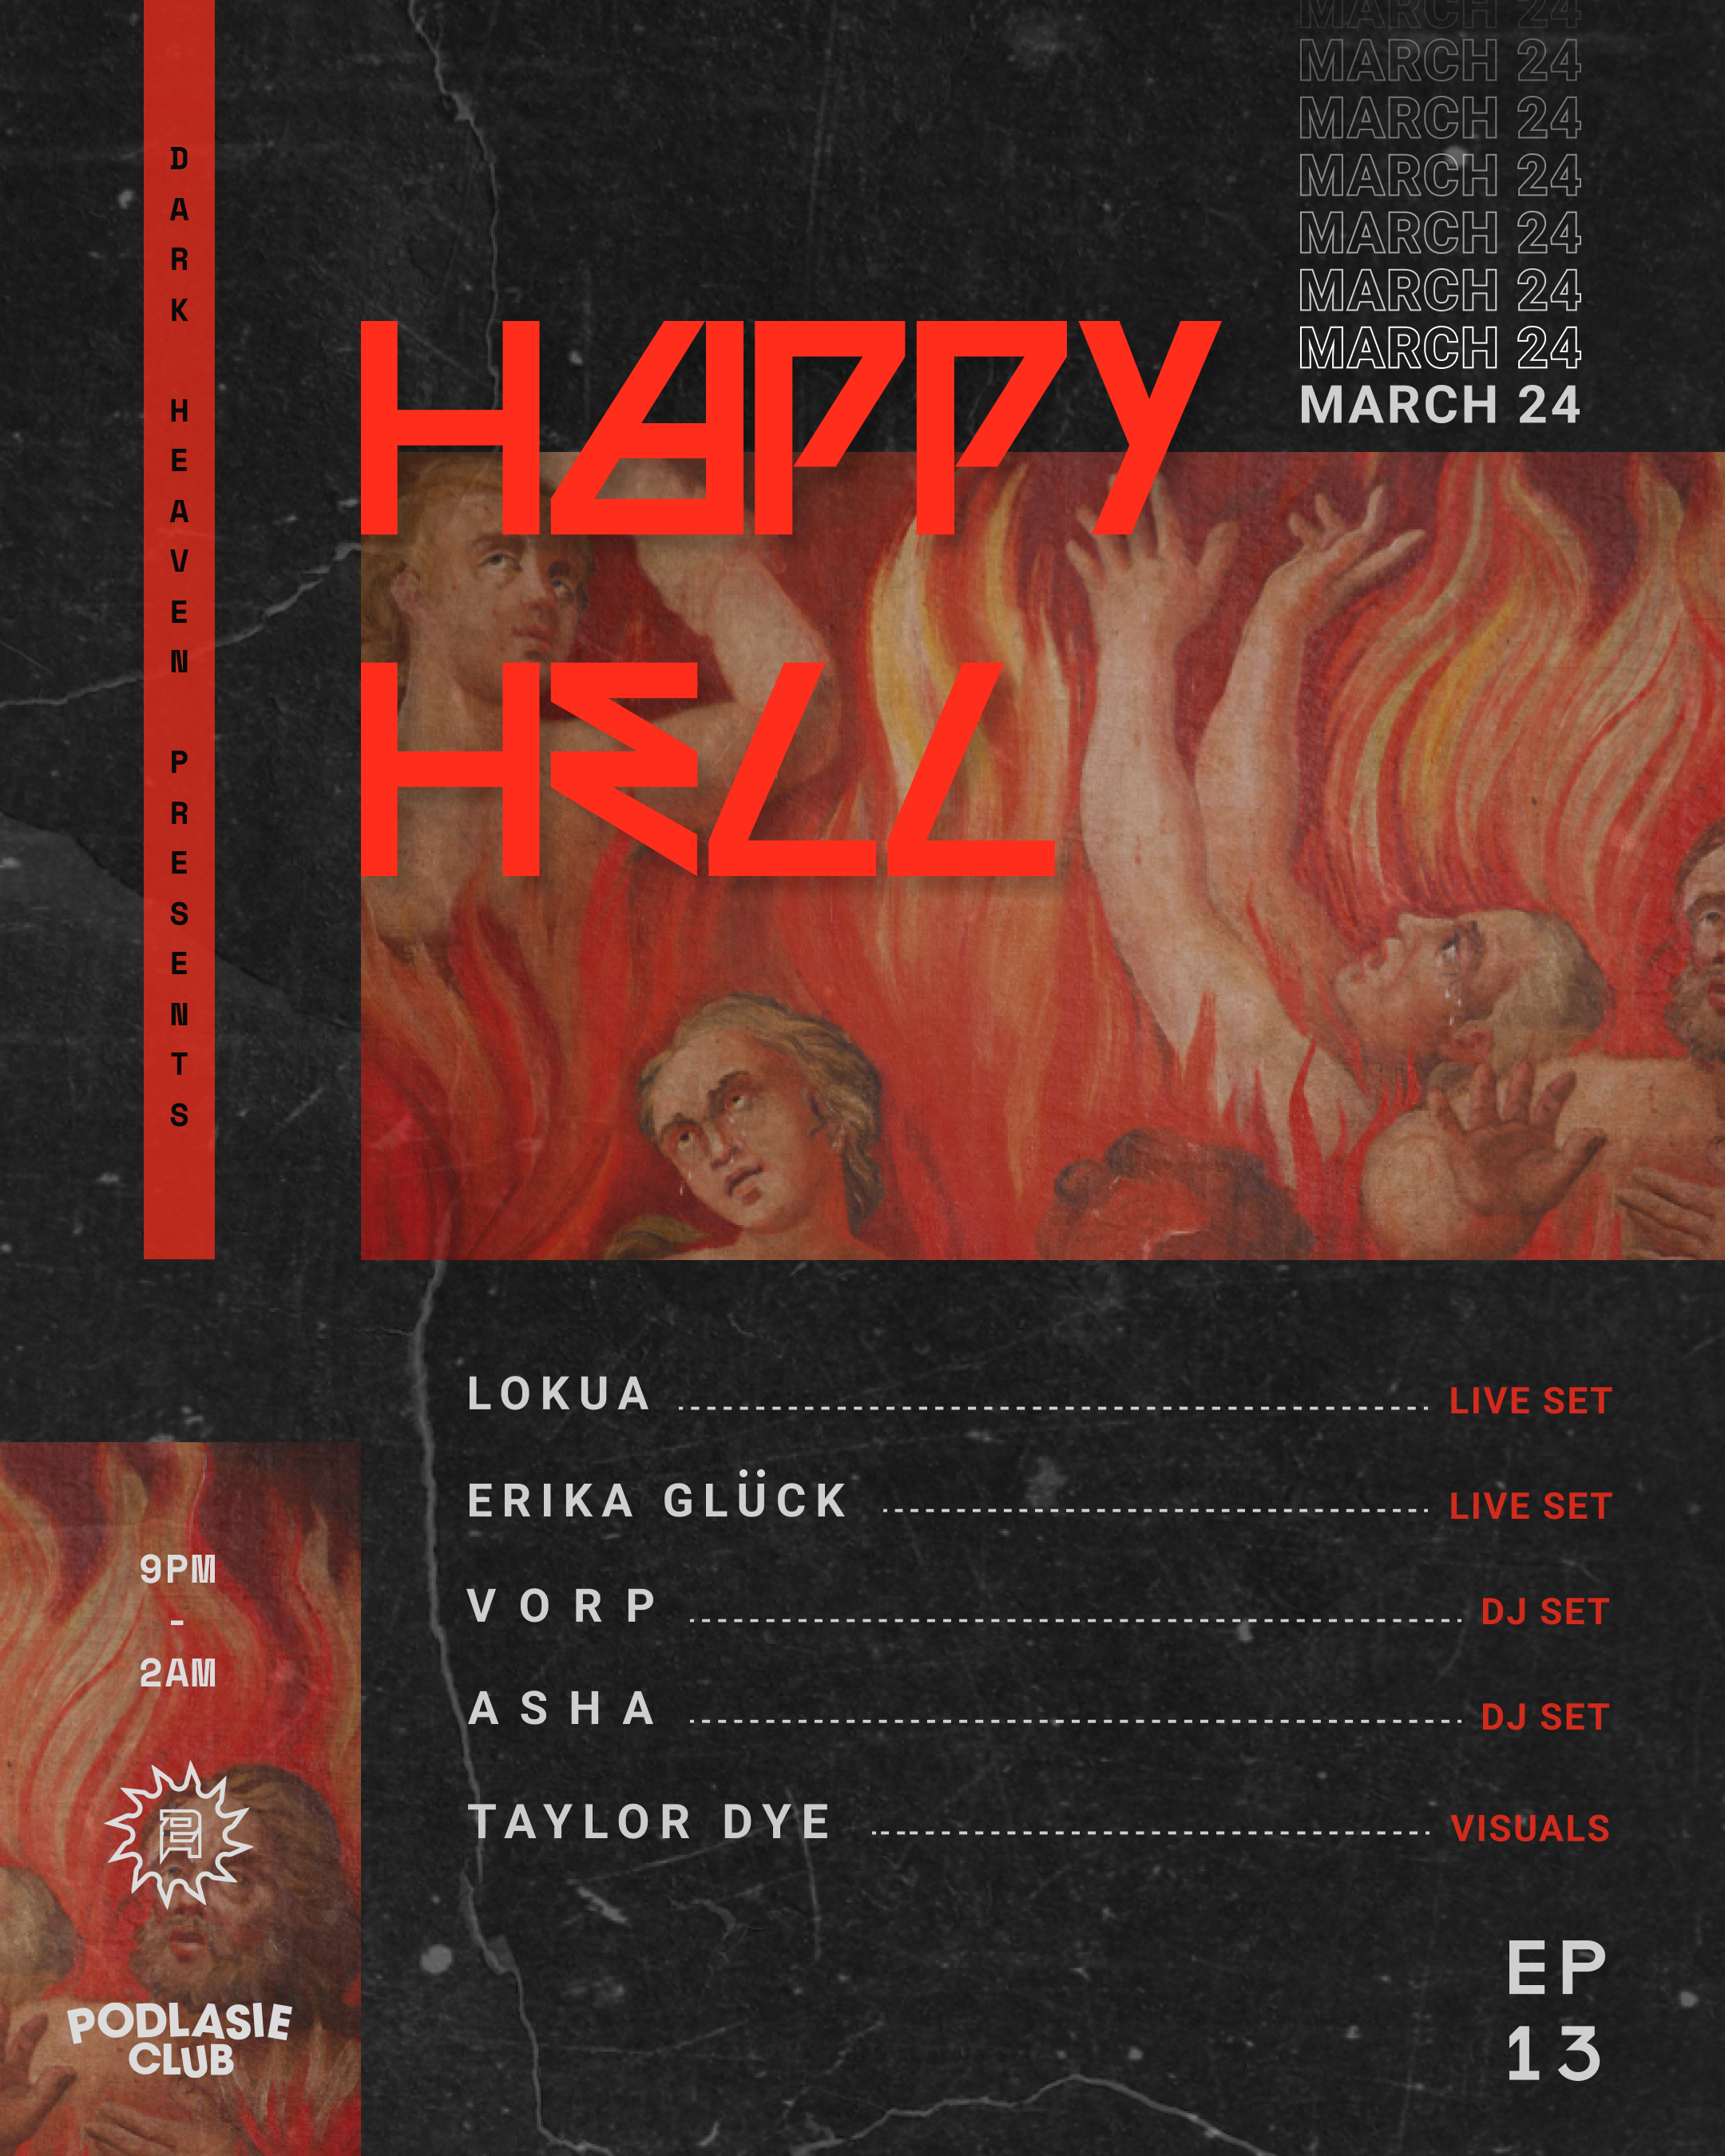 Dark Heaven presents Happy Hell with Lokua - Erika Glück - Vorp - Asha - Página frontal